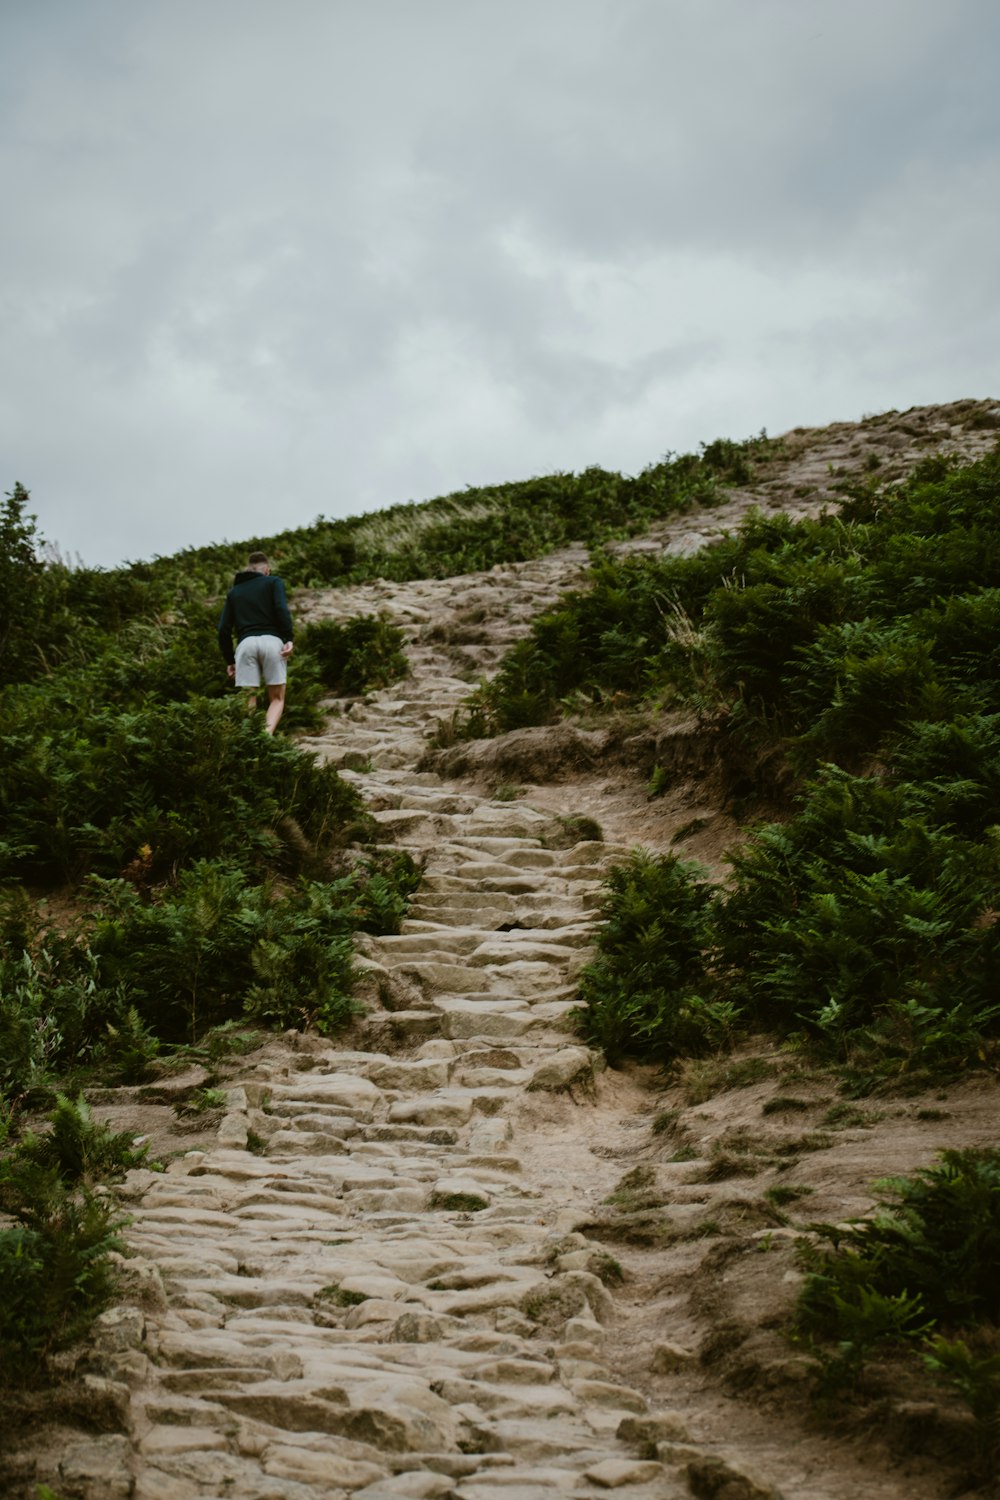 a man walking on a rocky path